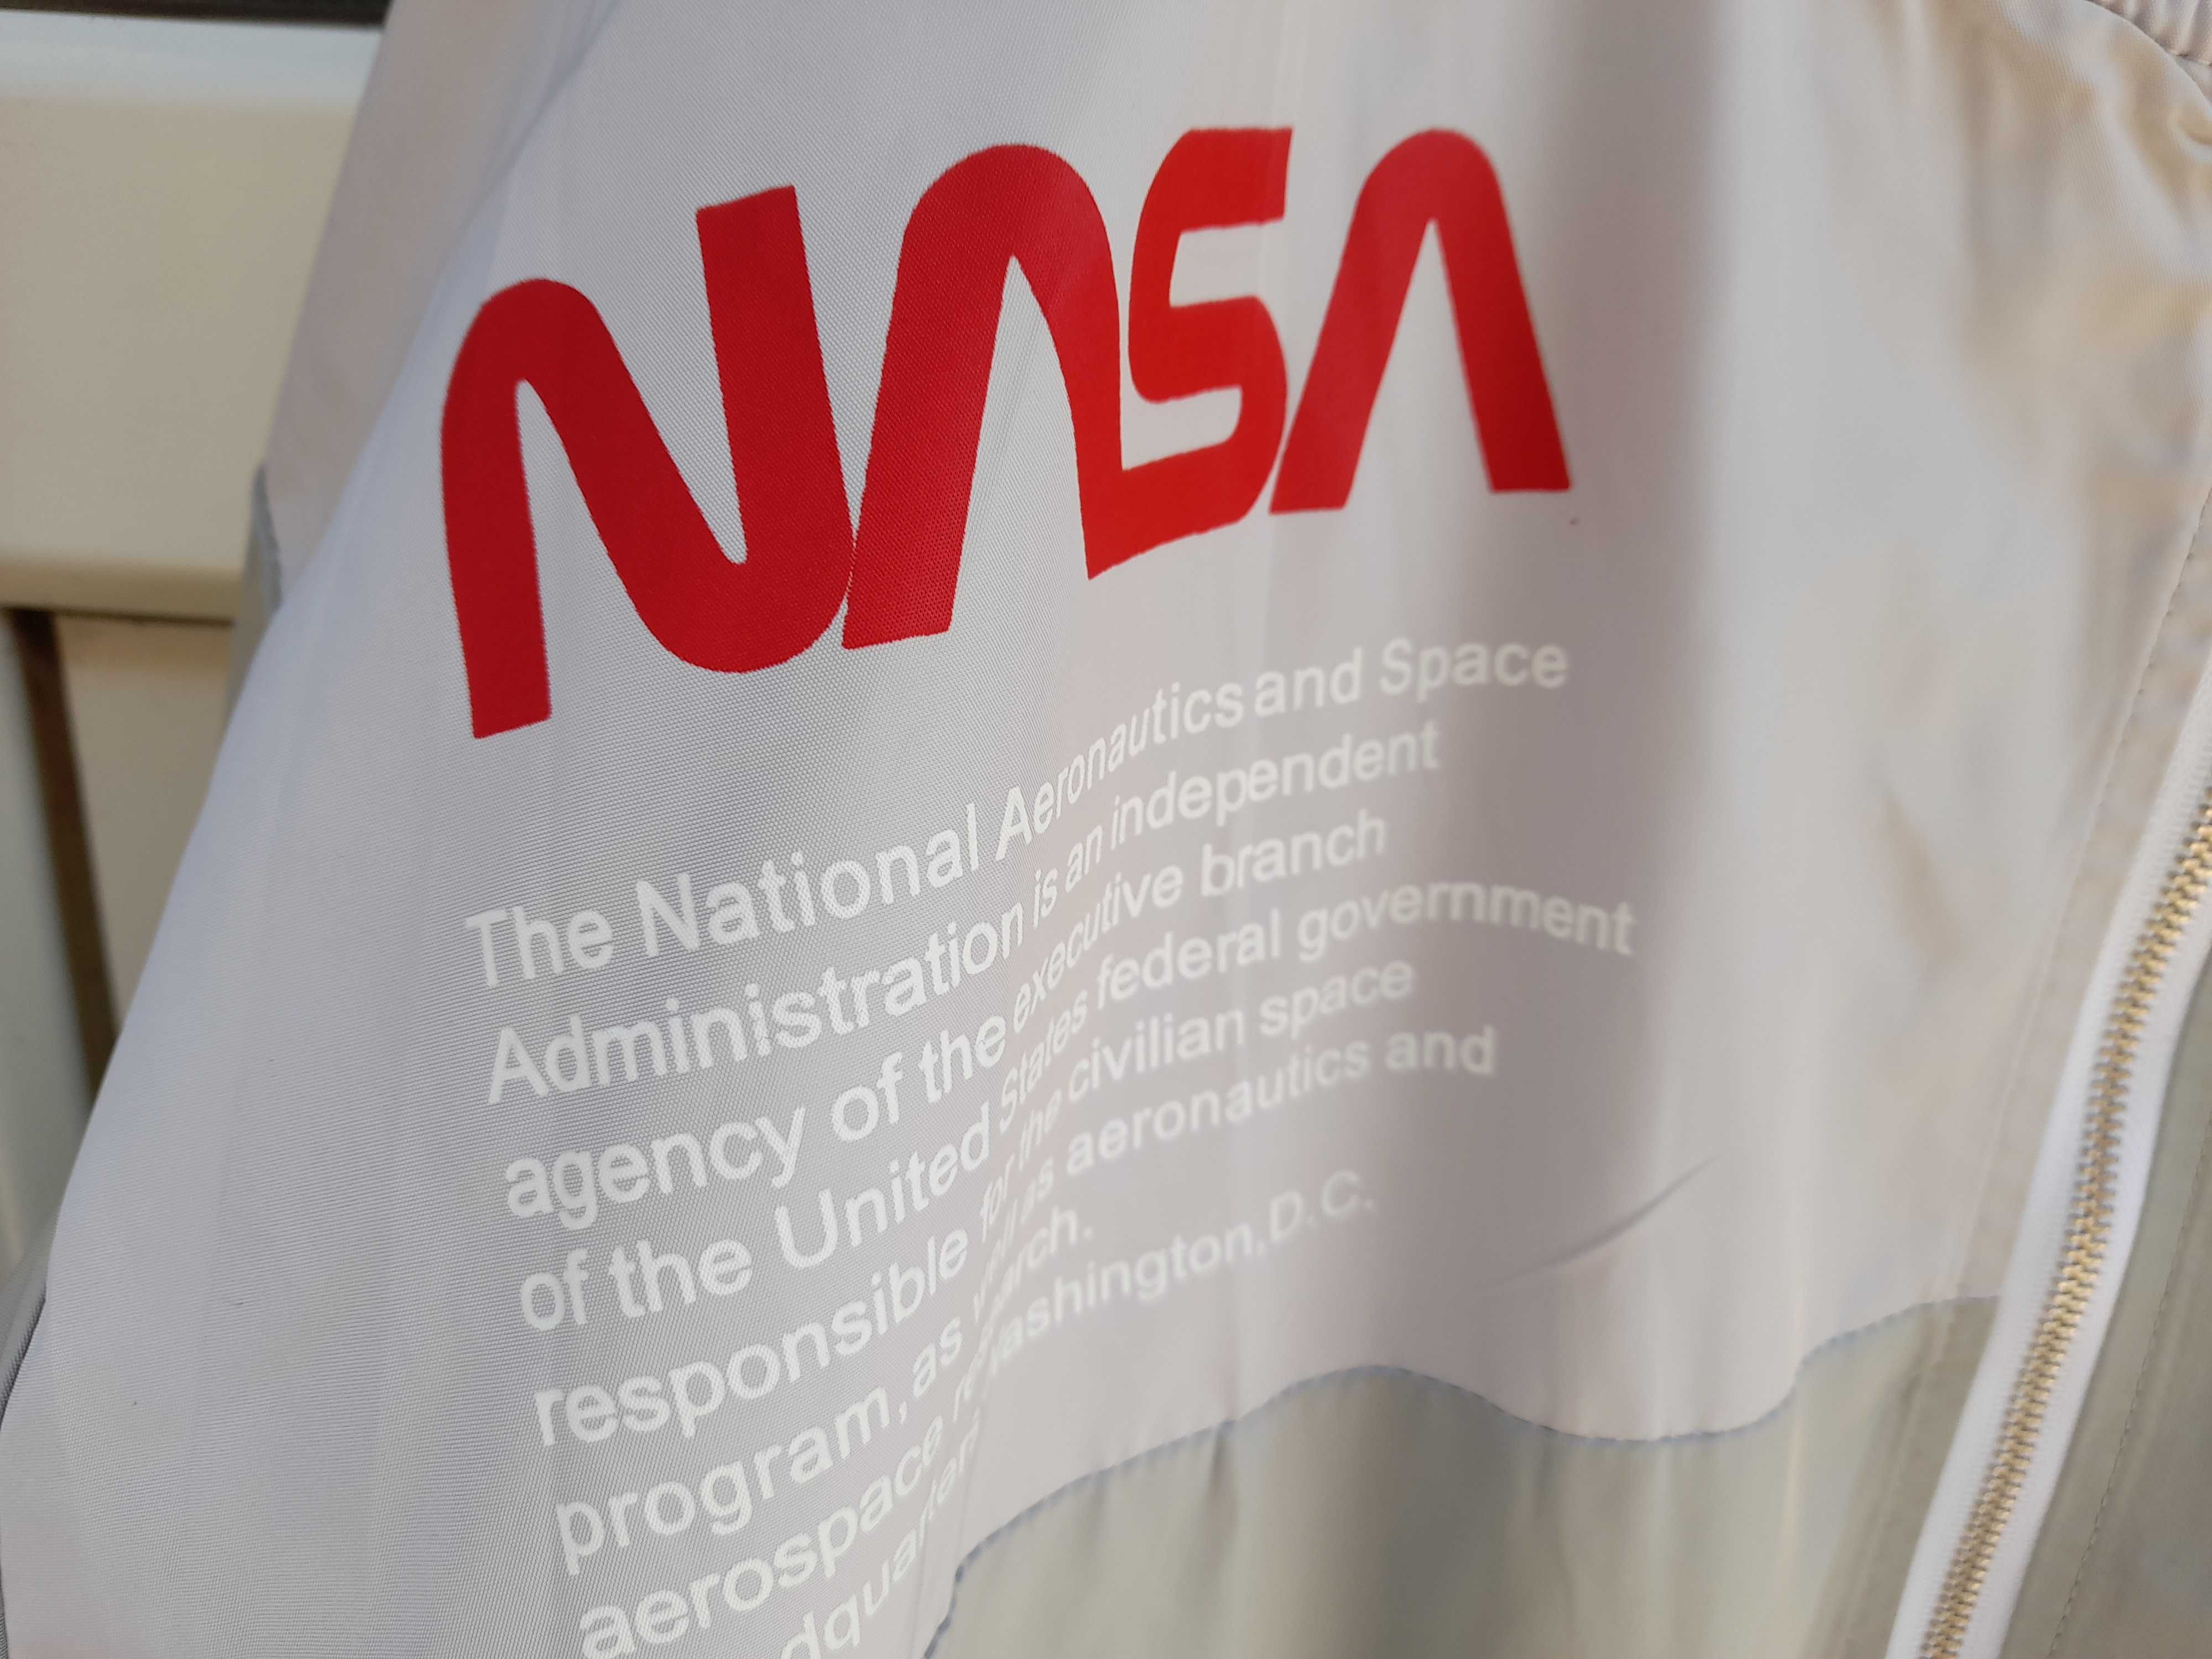 Geaca 3M NASA staff noua marime 3XL pe america L europa.